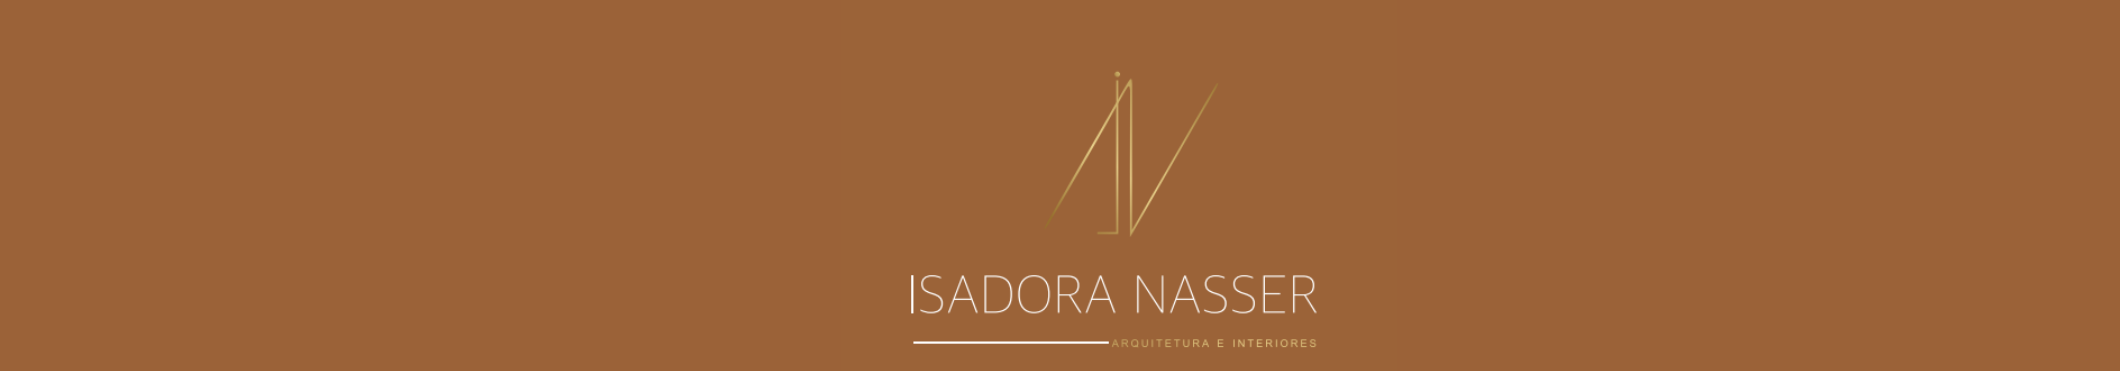 Isadora Nasser's profile banner